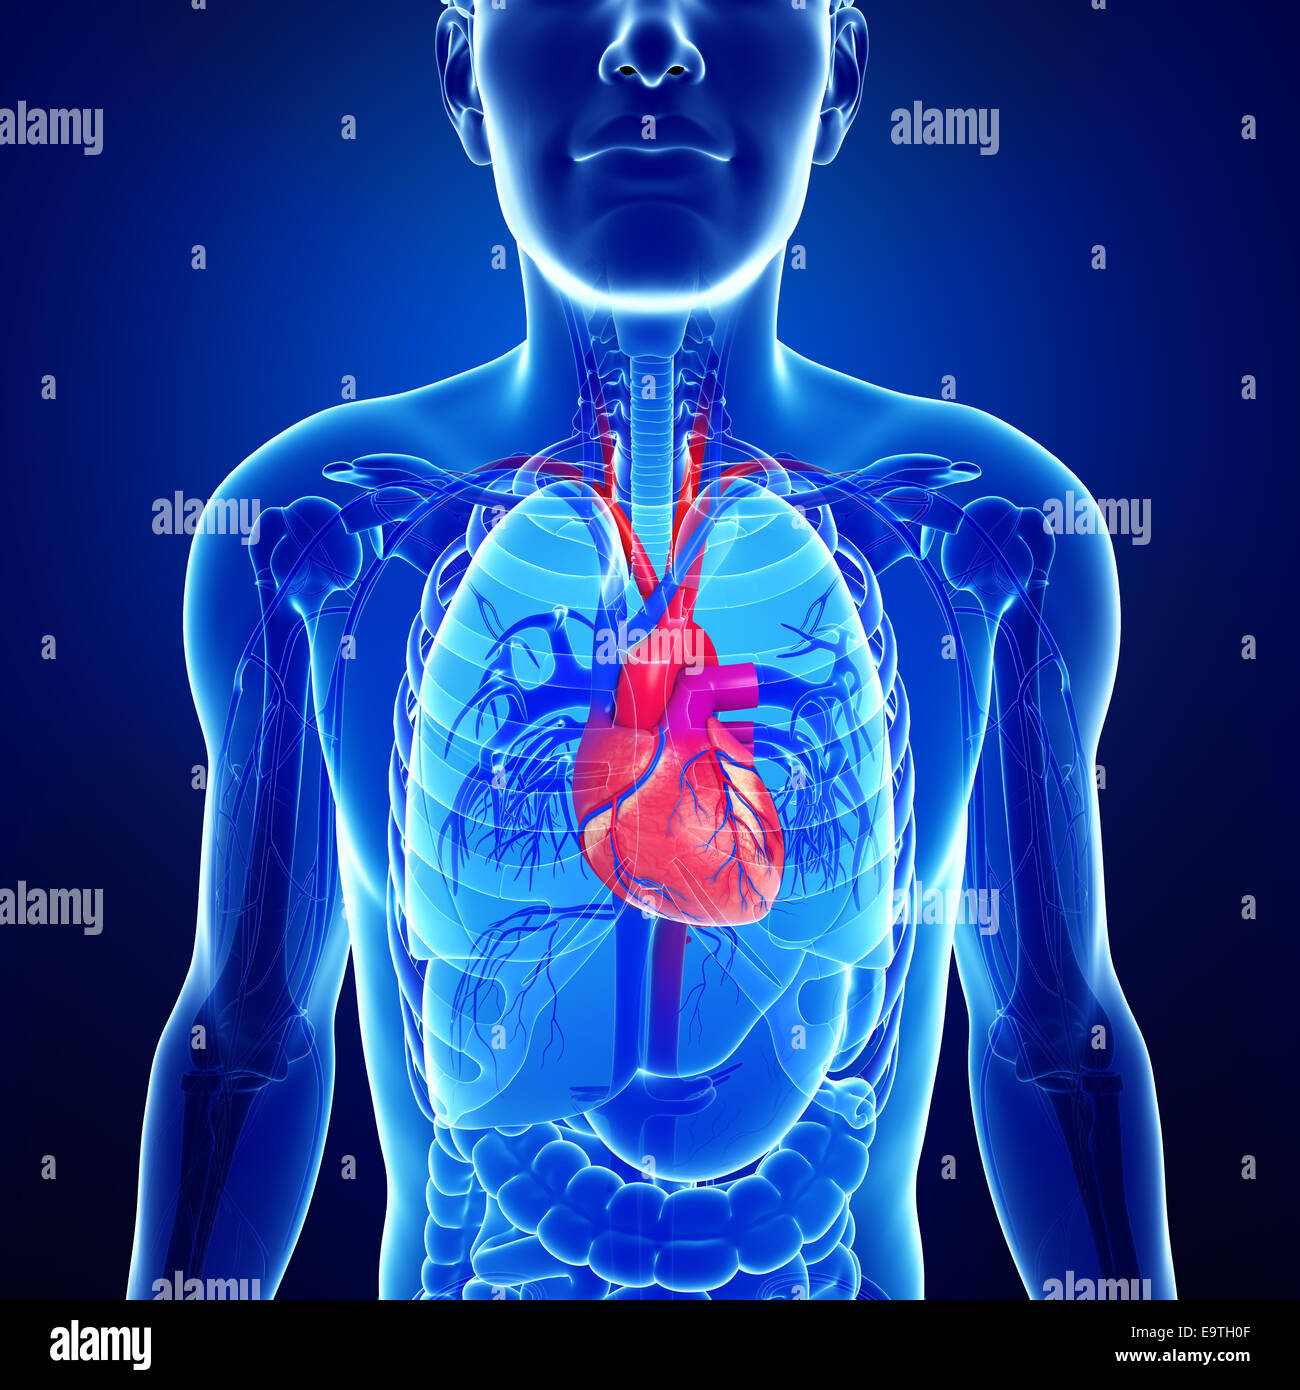 Illustration of Male heart anatomy Stock Photo - Alamy